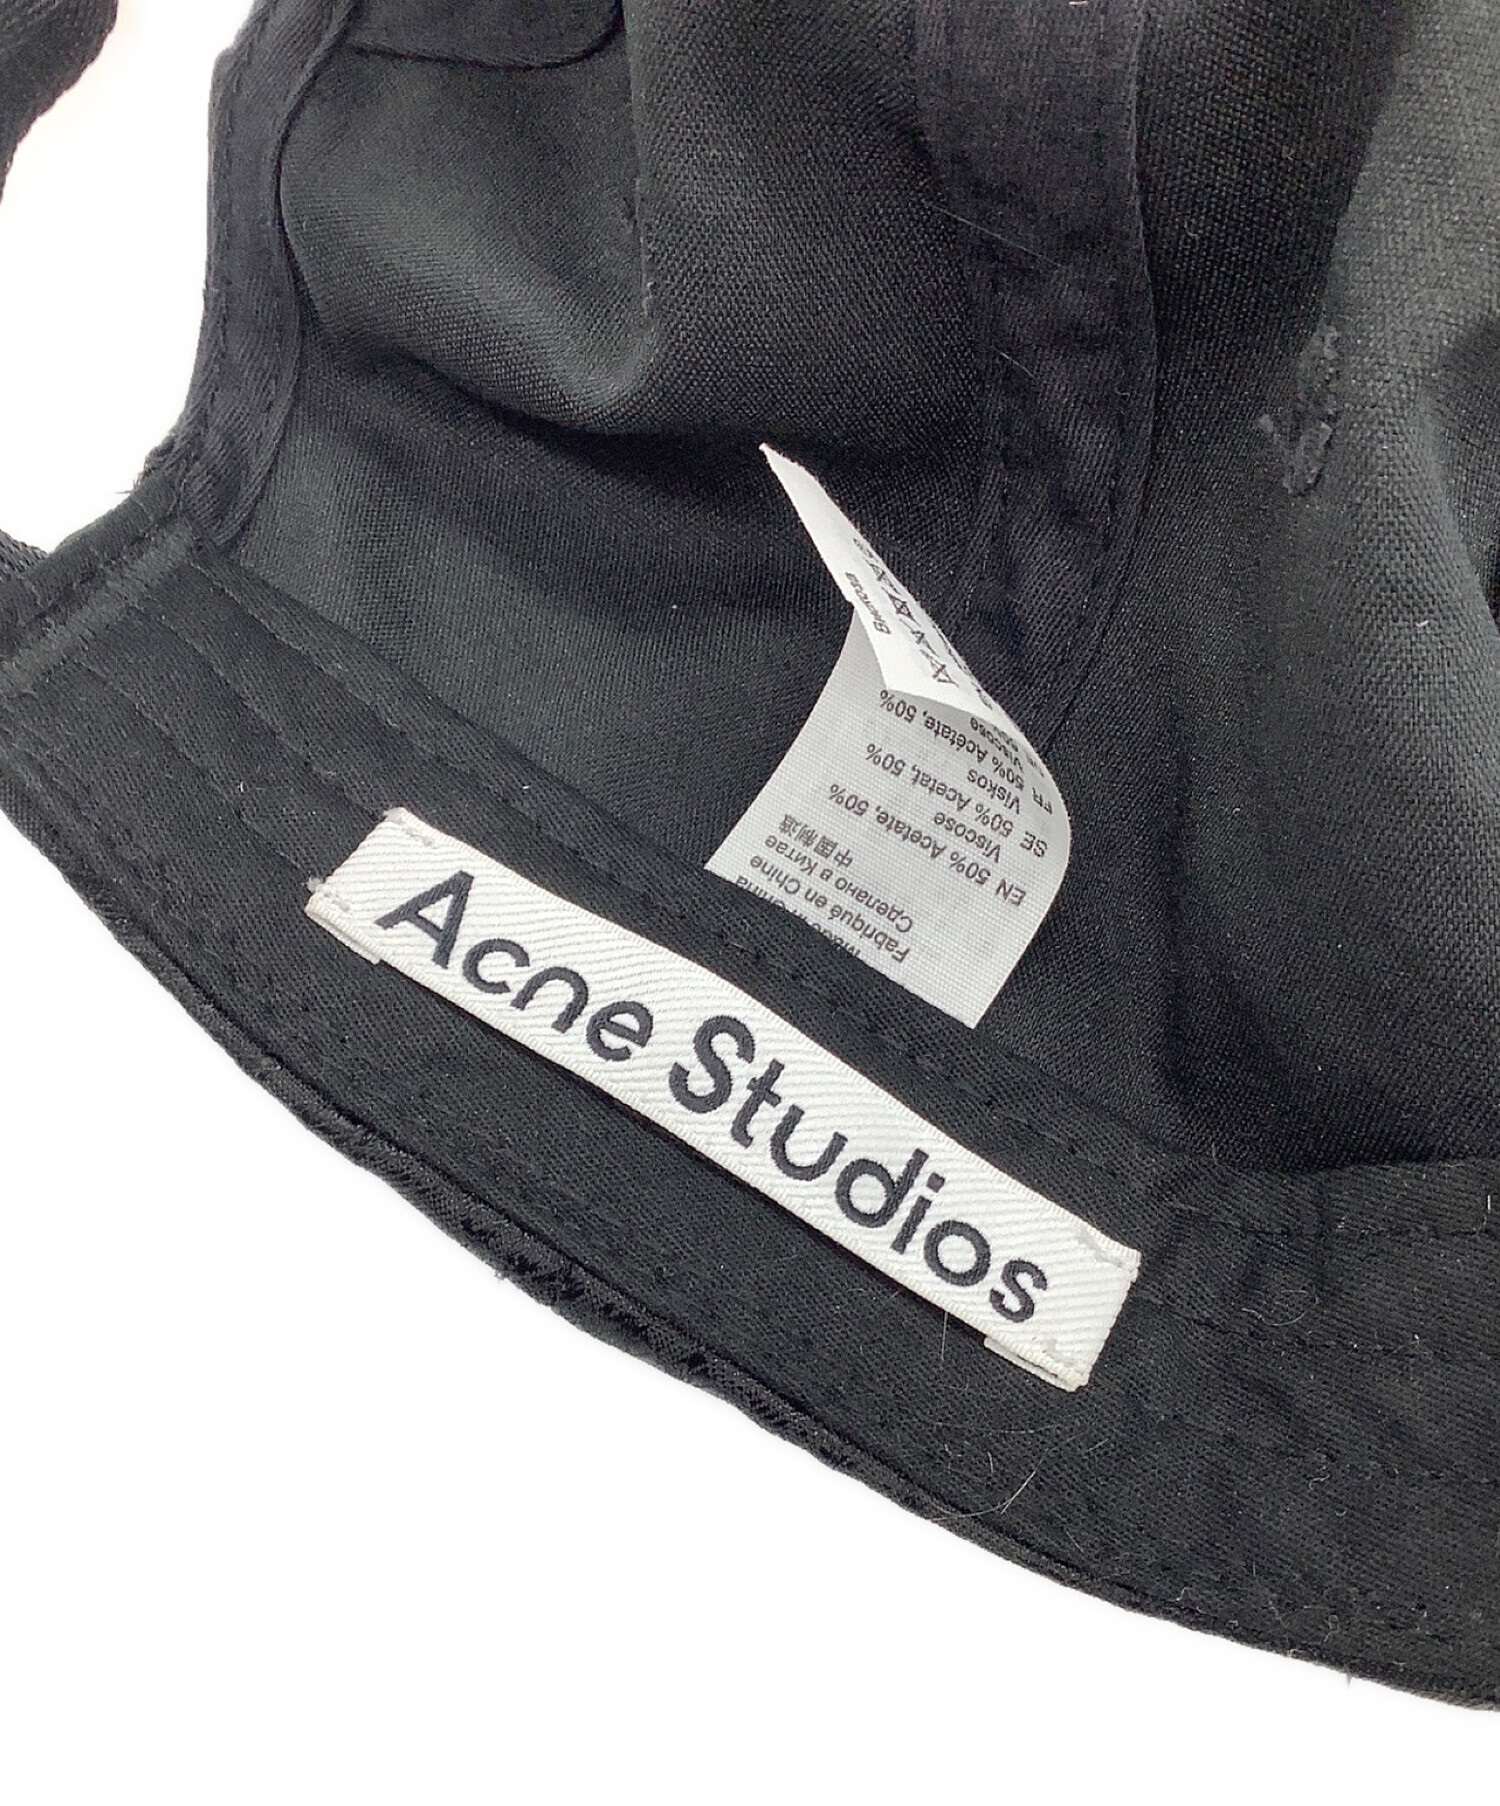 Acne studios (アクネストゥディオズ) ベースボールキャップ ブラック サイズ:59cm